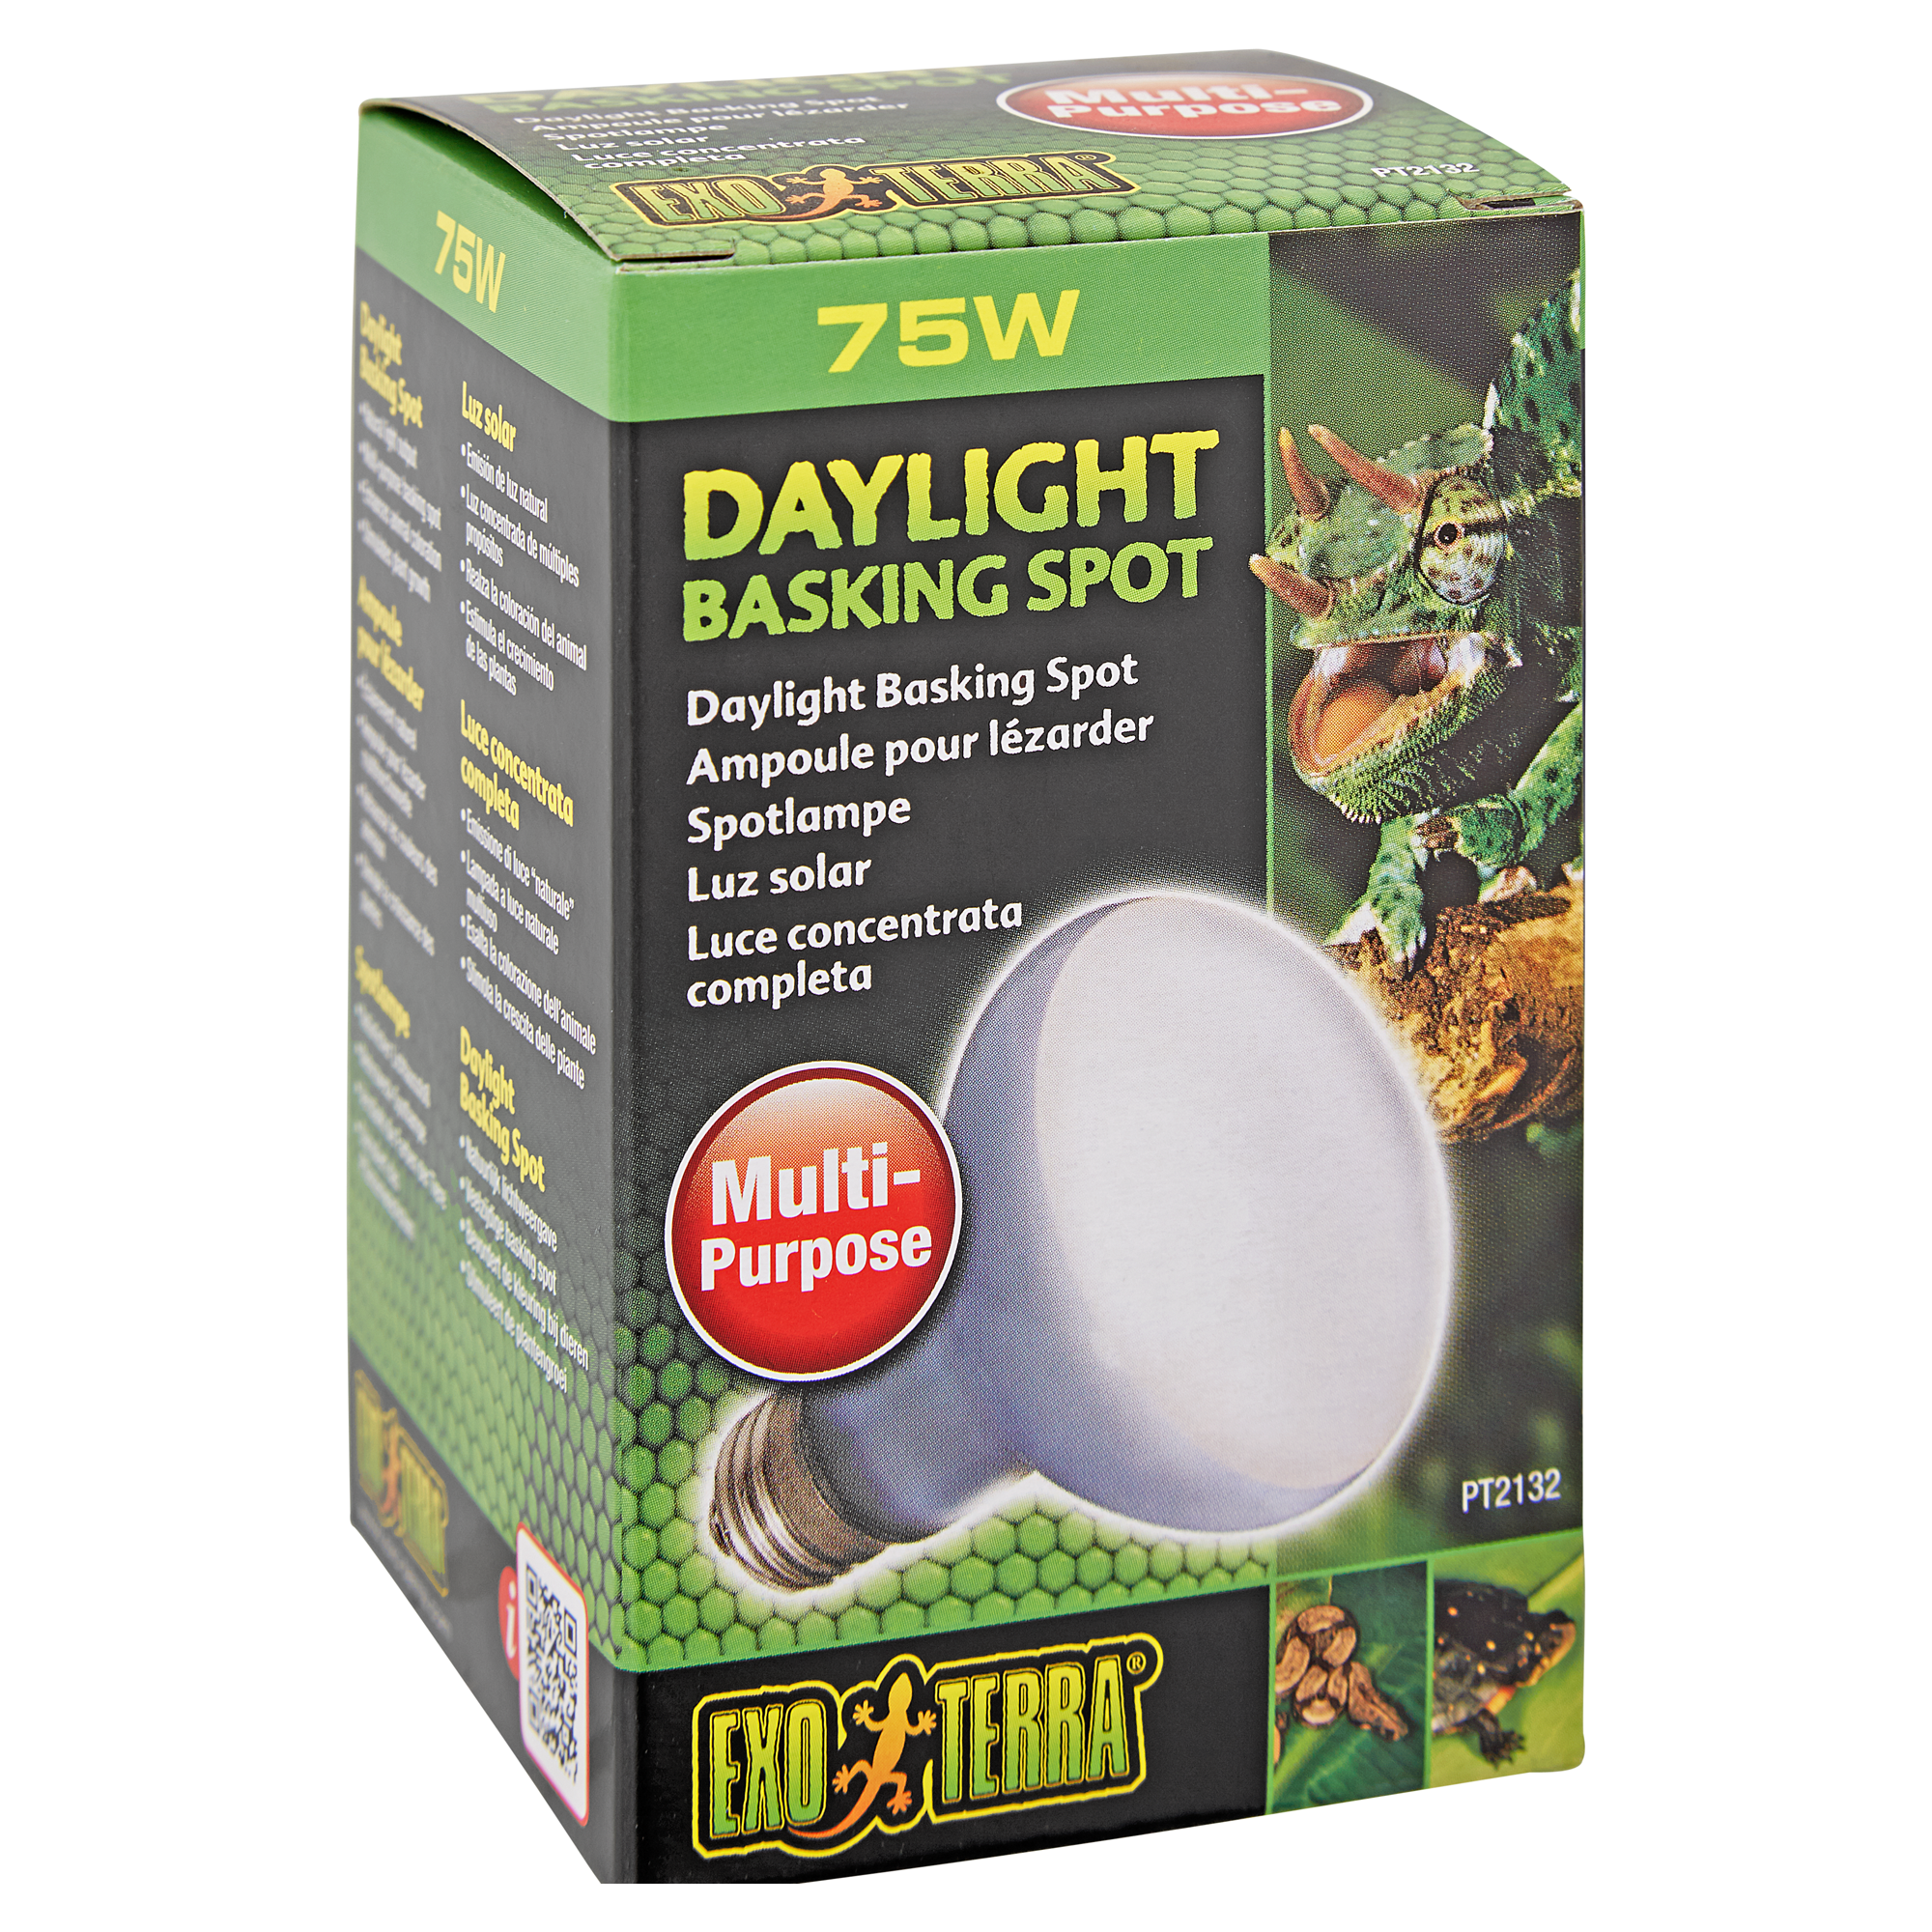 Tageslichtwärmelampe "Daylight Basking Spot" 75 W + product picture